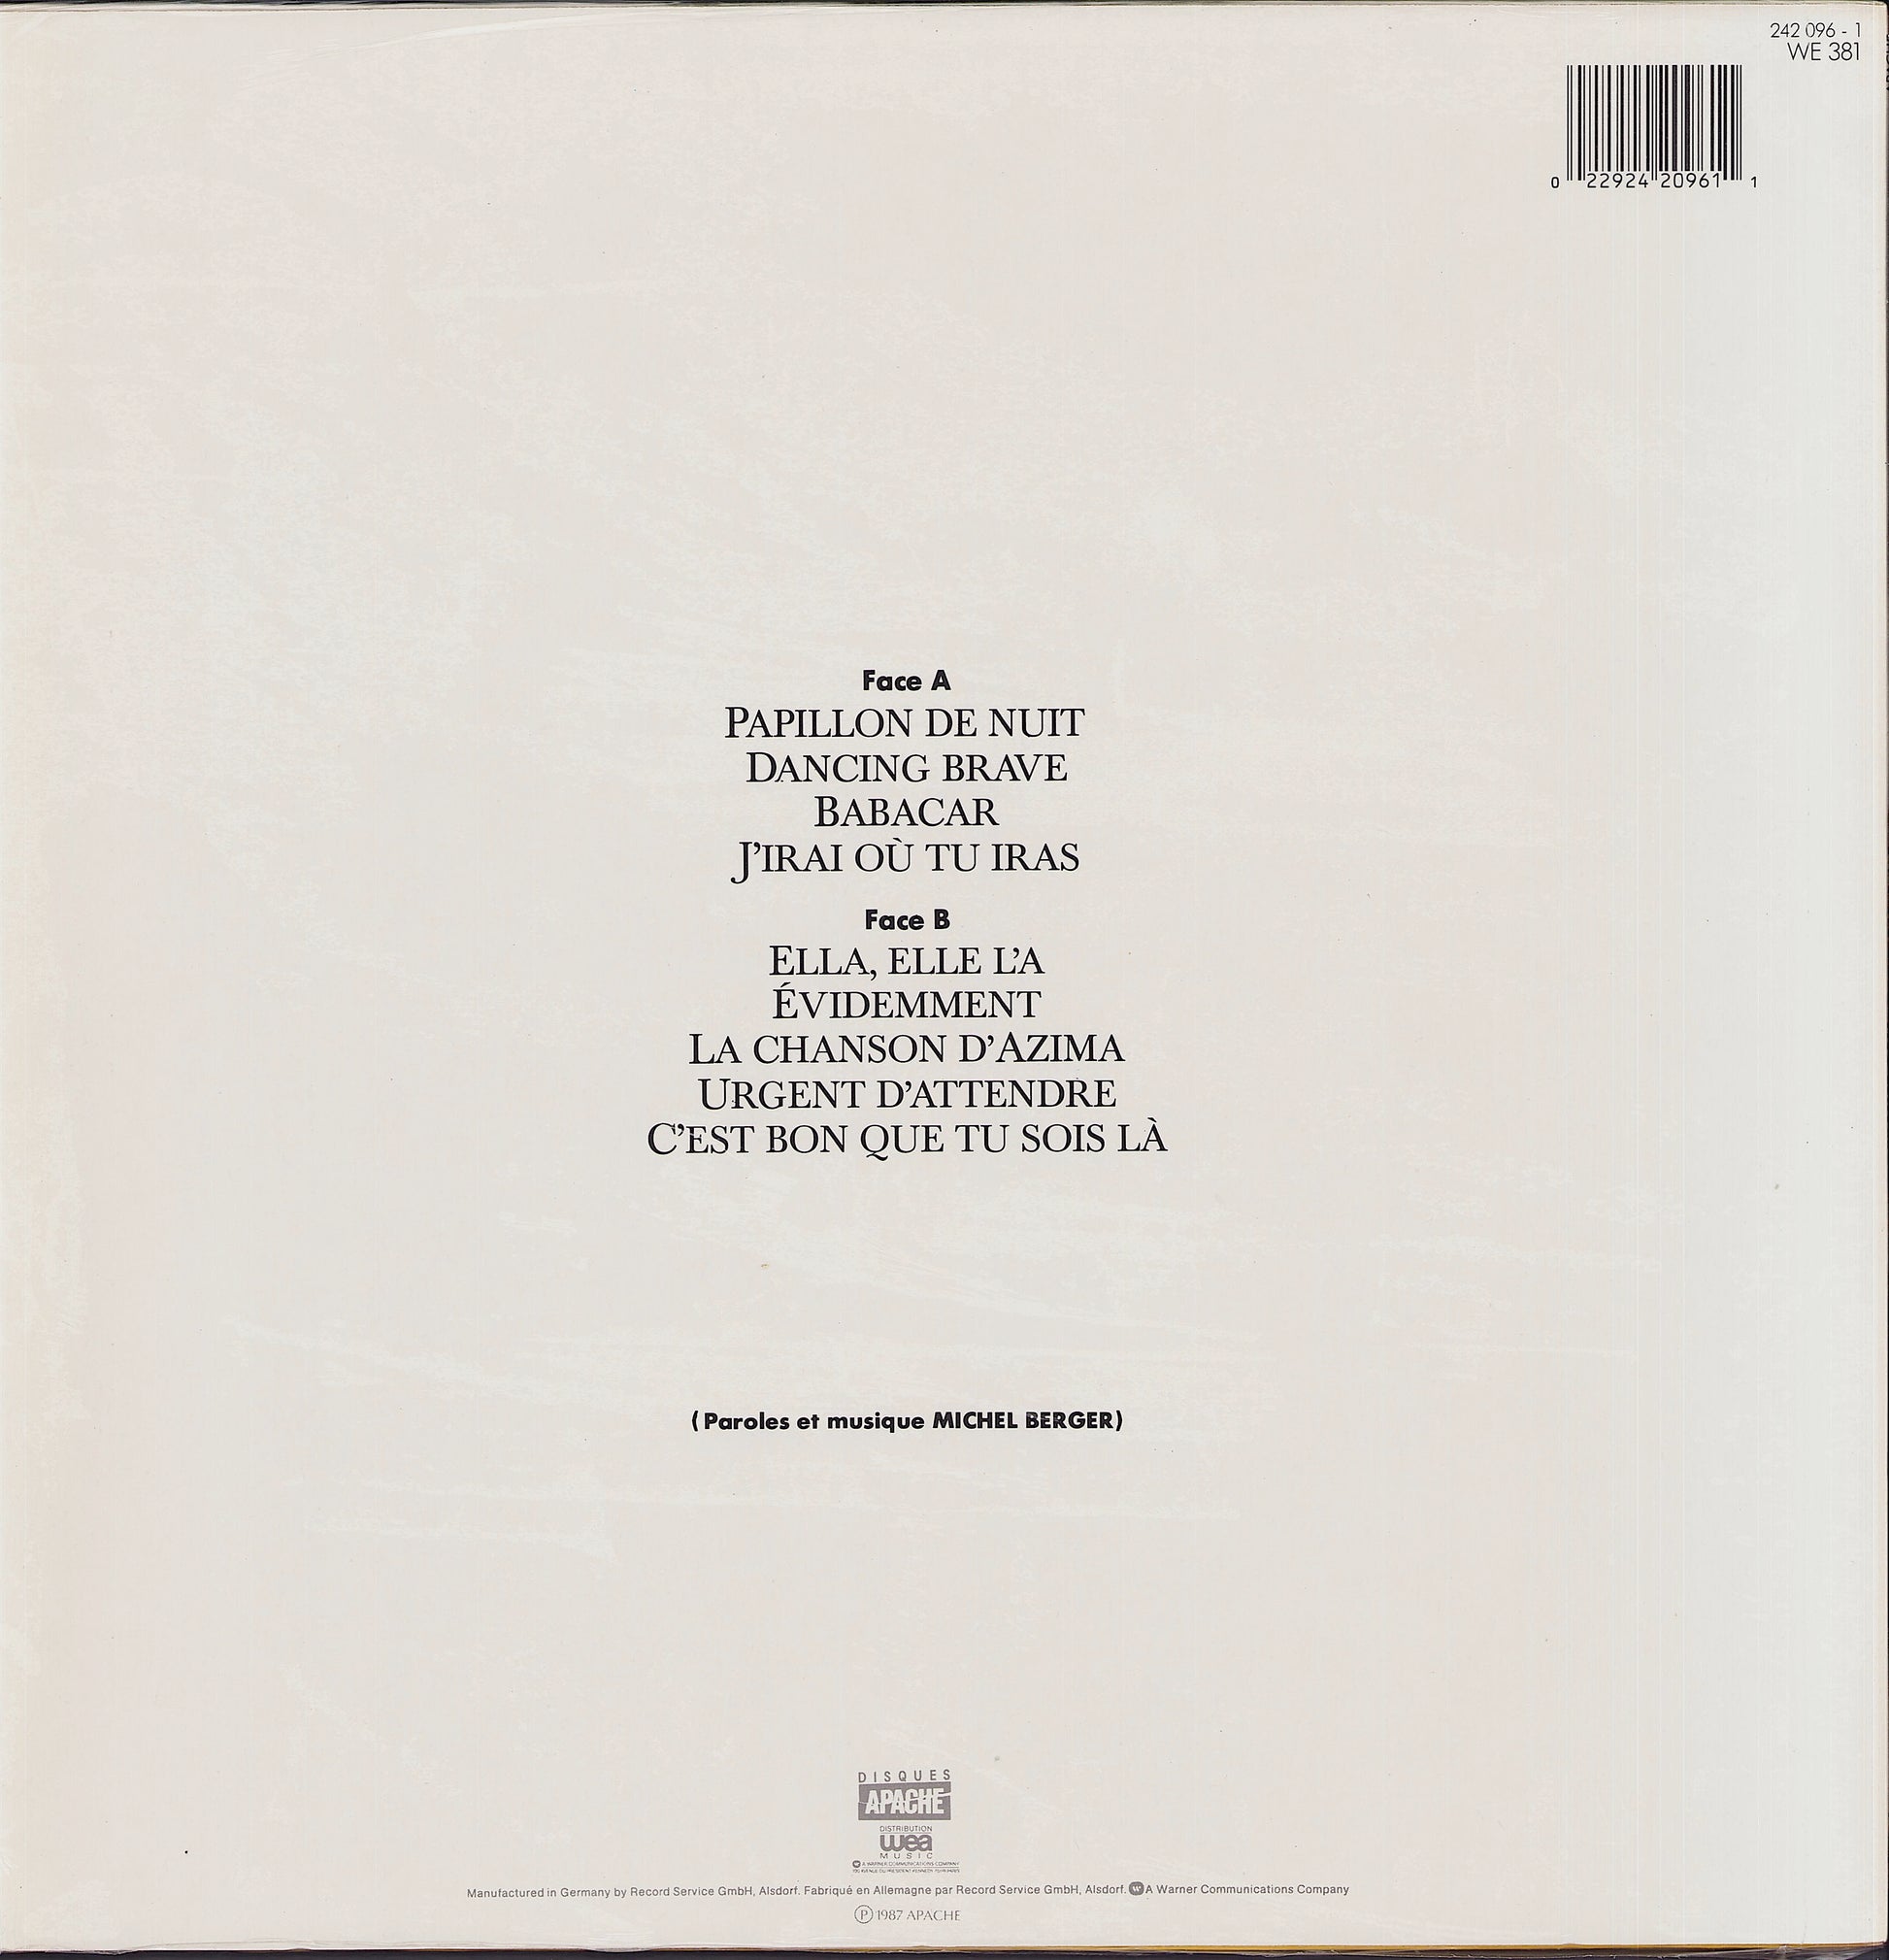 France Gall ‎- Babacar Vinyl LP FR